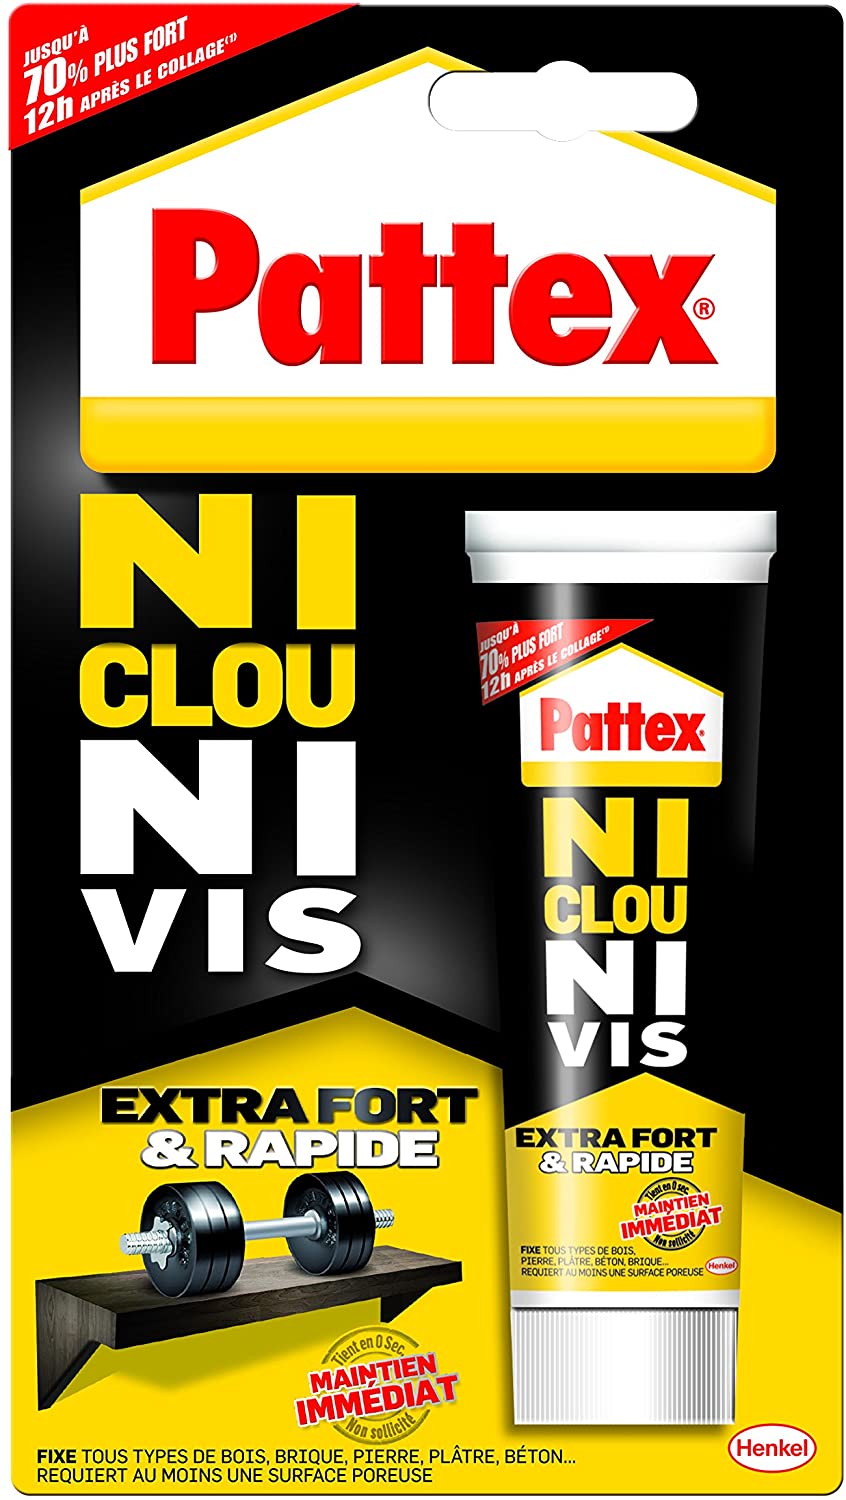 deal - Pattex Ni Clou Ni Vis Extra Fort & Rapide, 2,91€ au lieu de 6,30€ 